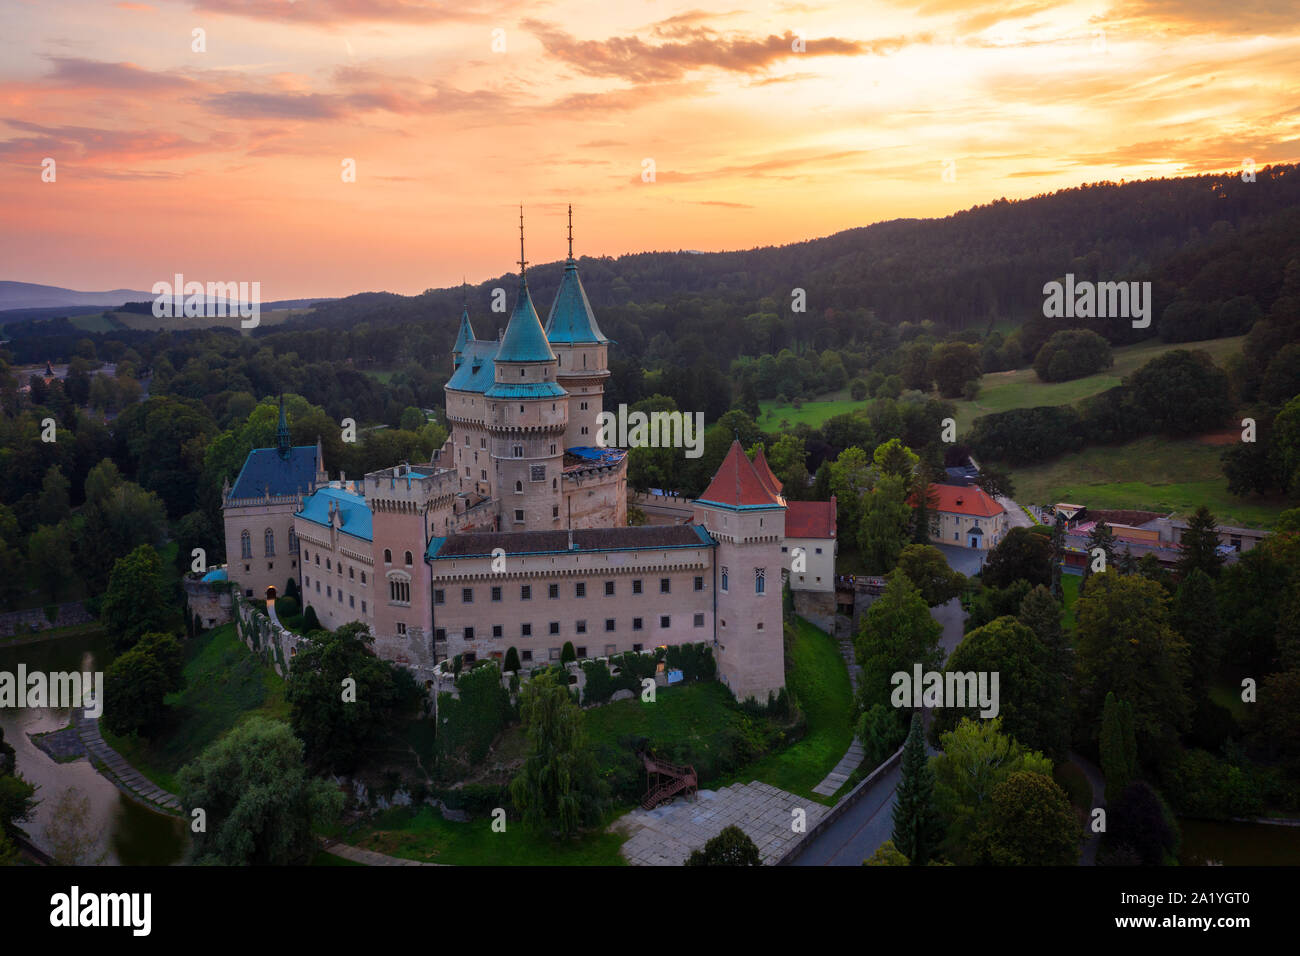 Castle Bojnice, central Europe, Slovakia. UNESCO. Sunset light. Stock Photo